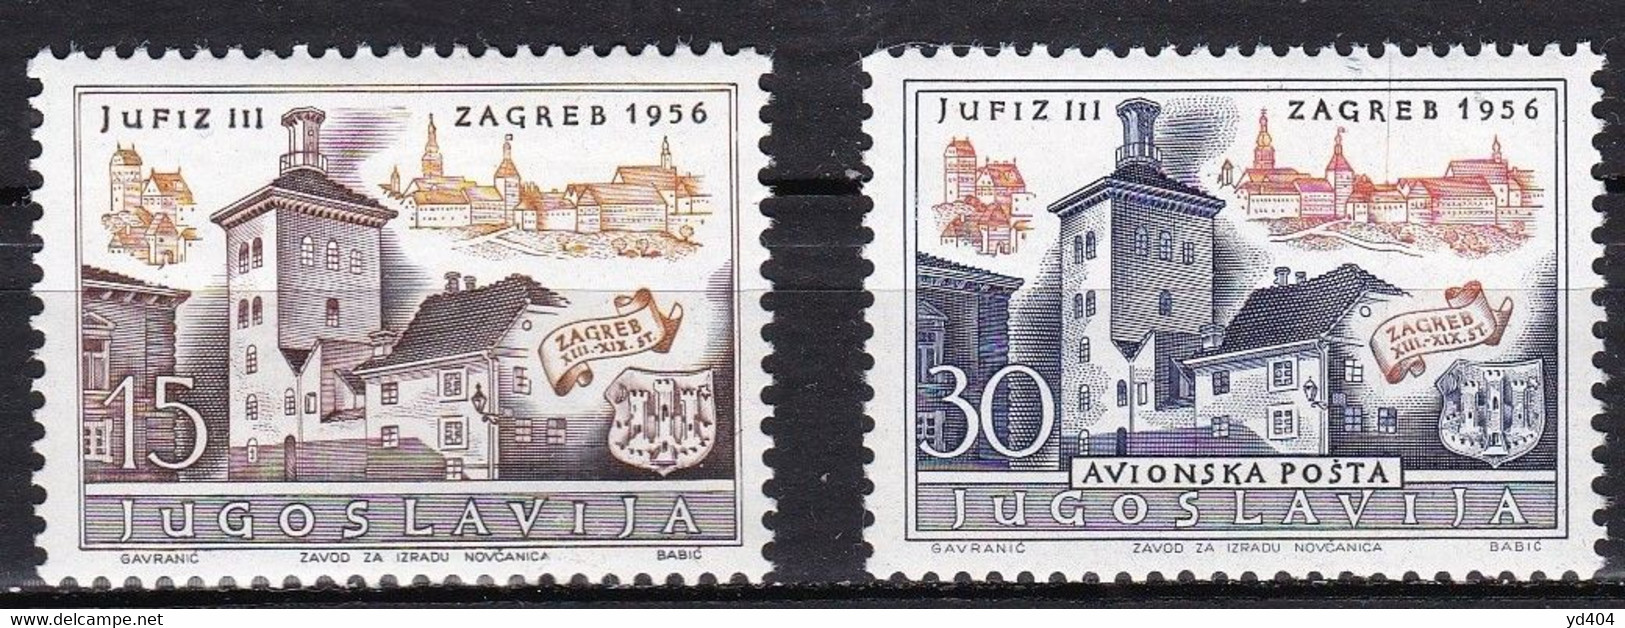 YU431 – YOUGOSLAVIA – AIRMAIL - 1956 – PHIL. EXHIB. JUFIZ III – SG # 817/8 MNH 9 € - Luftpost